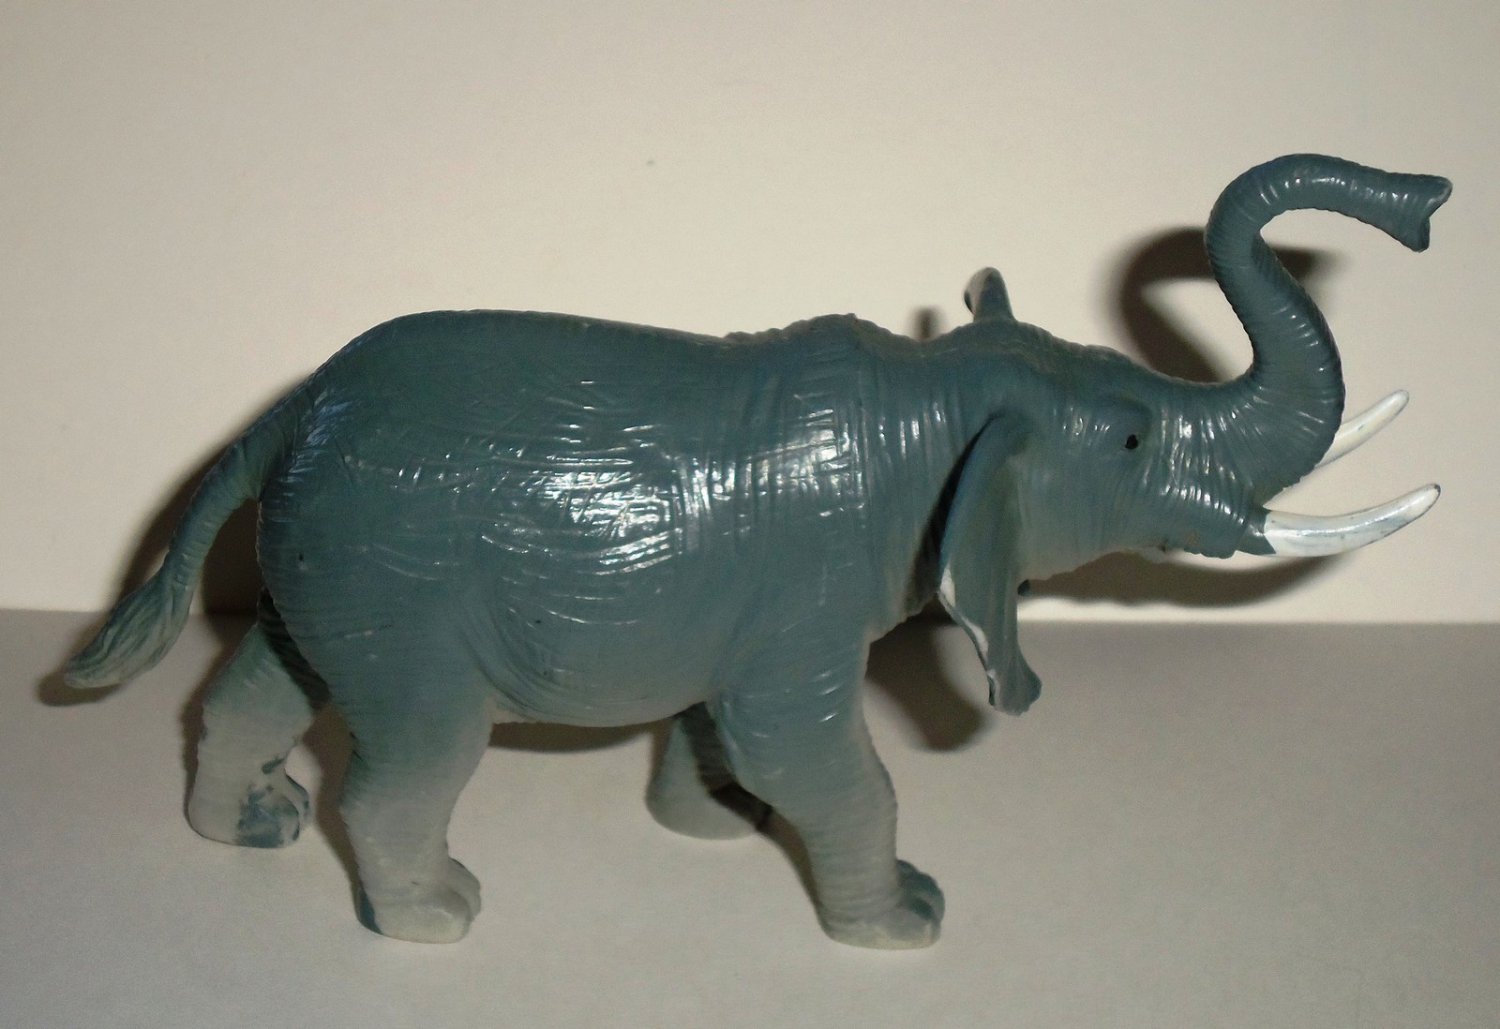 Greenbrier 5.25" Long Plastic Elephant Toy Animal Figure